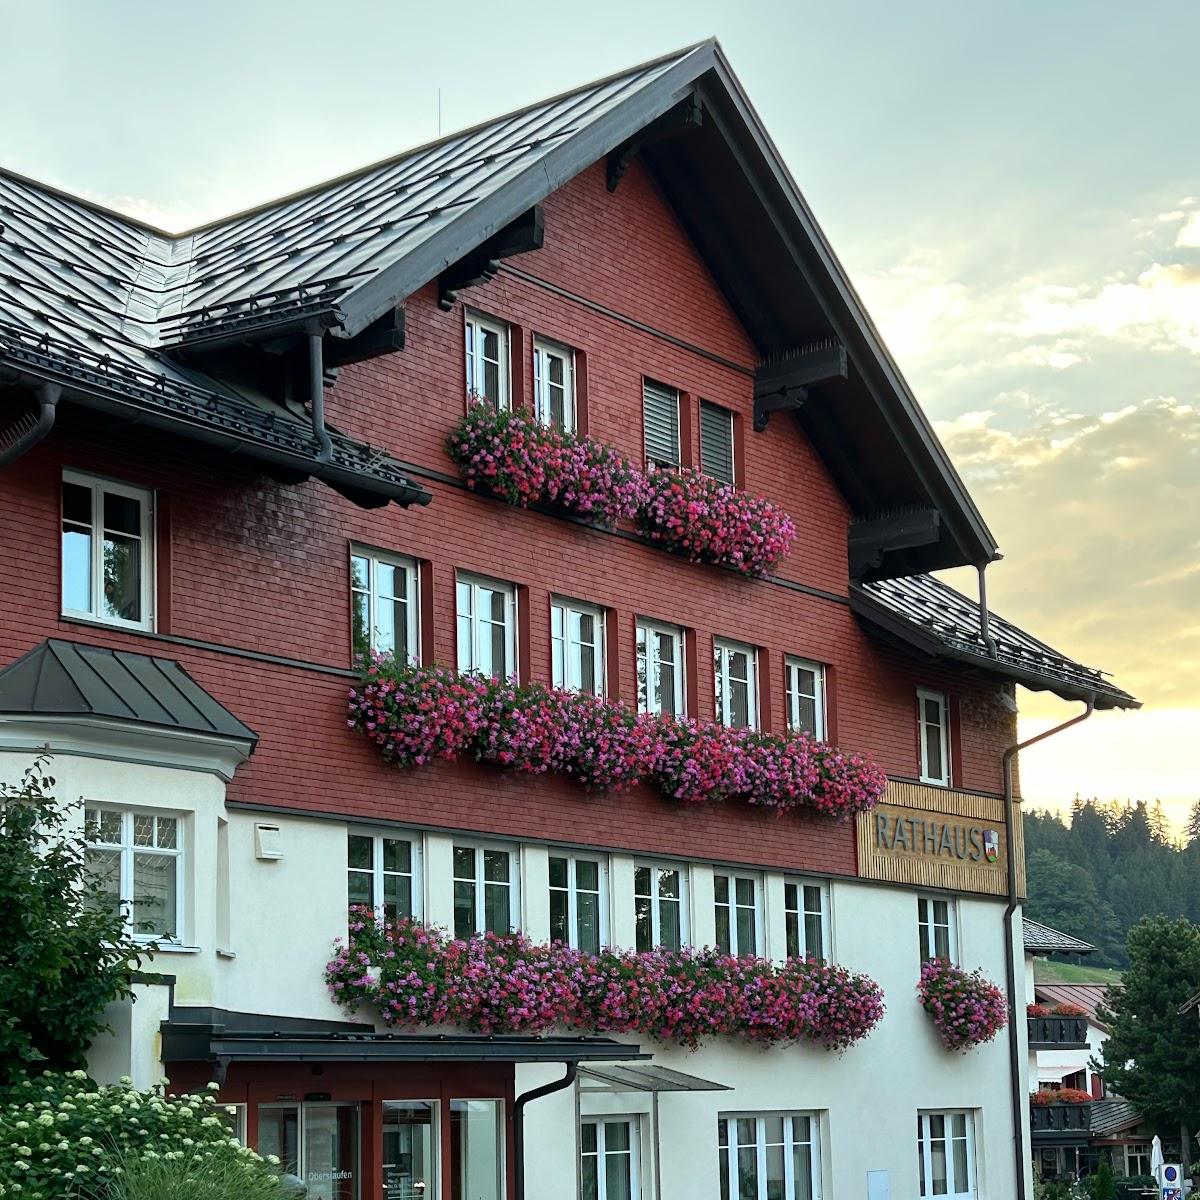 Restaurant "Oberstaufen" in Oberstaufen